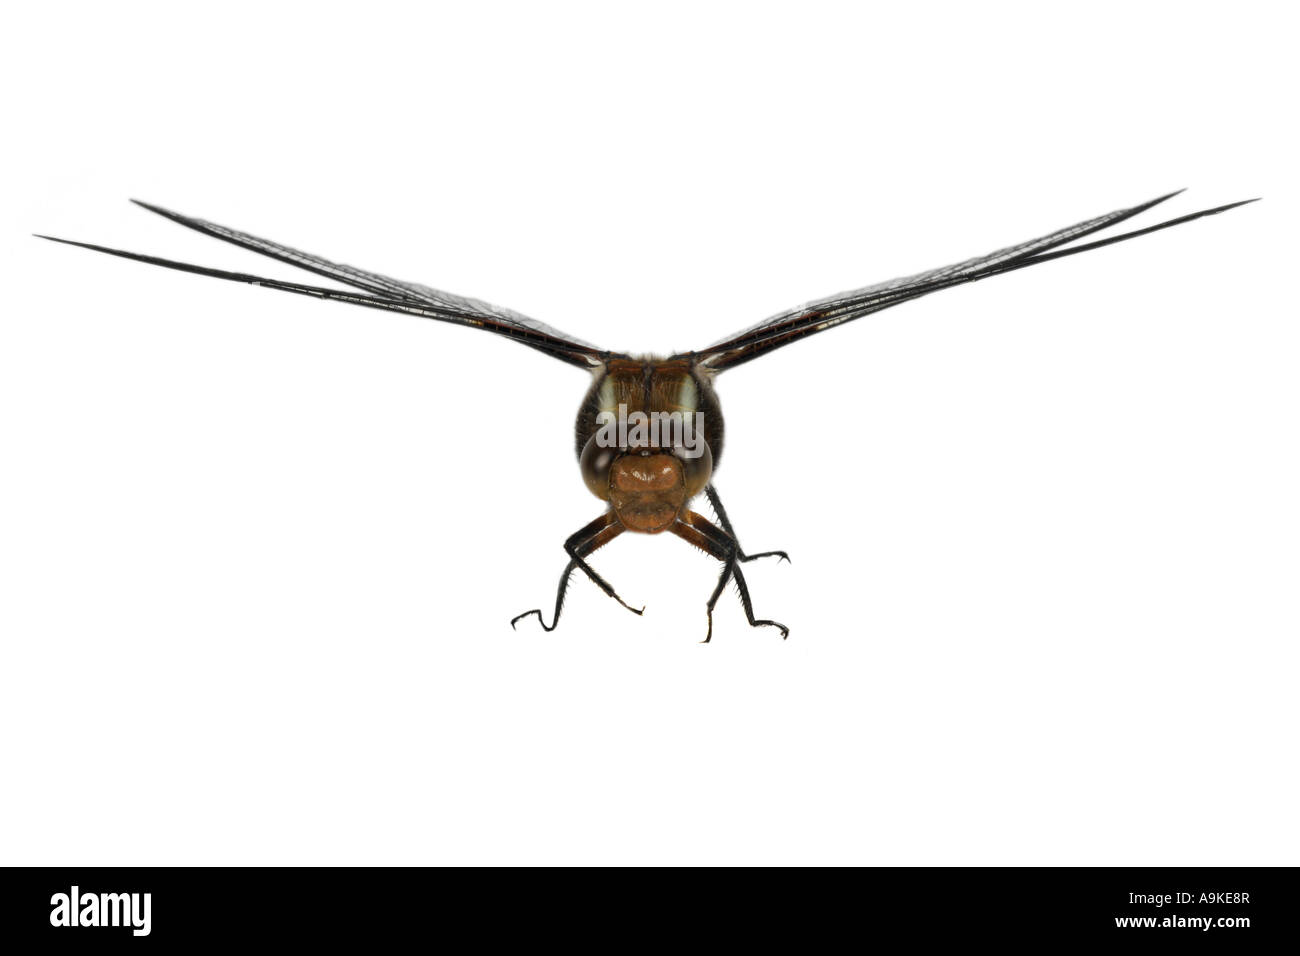 broad-bodied libellula, broad-bodied chaser (Libellula depressa), Germany Stock Photo